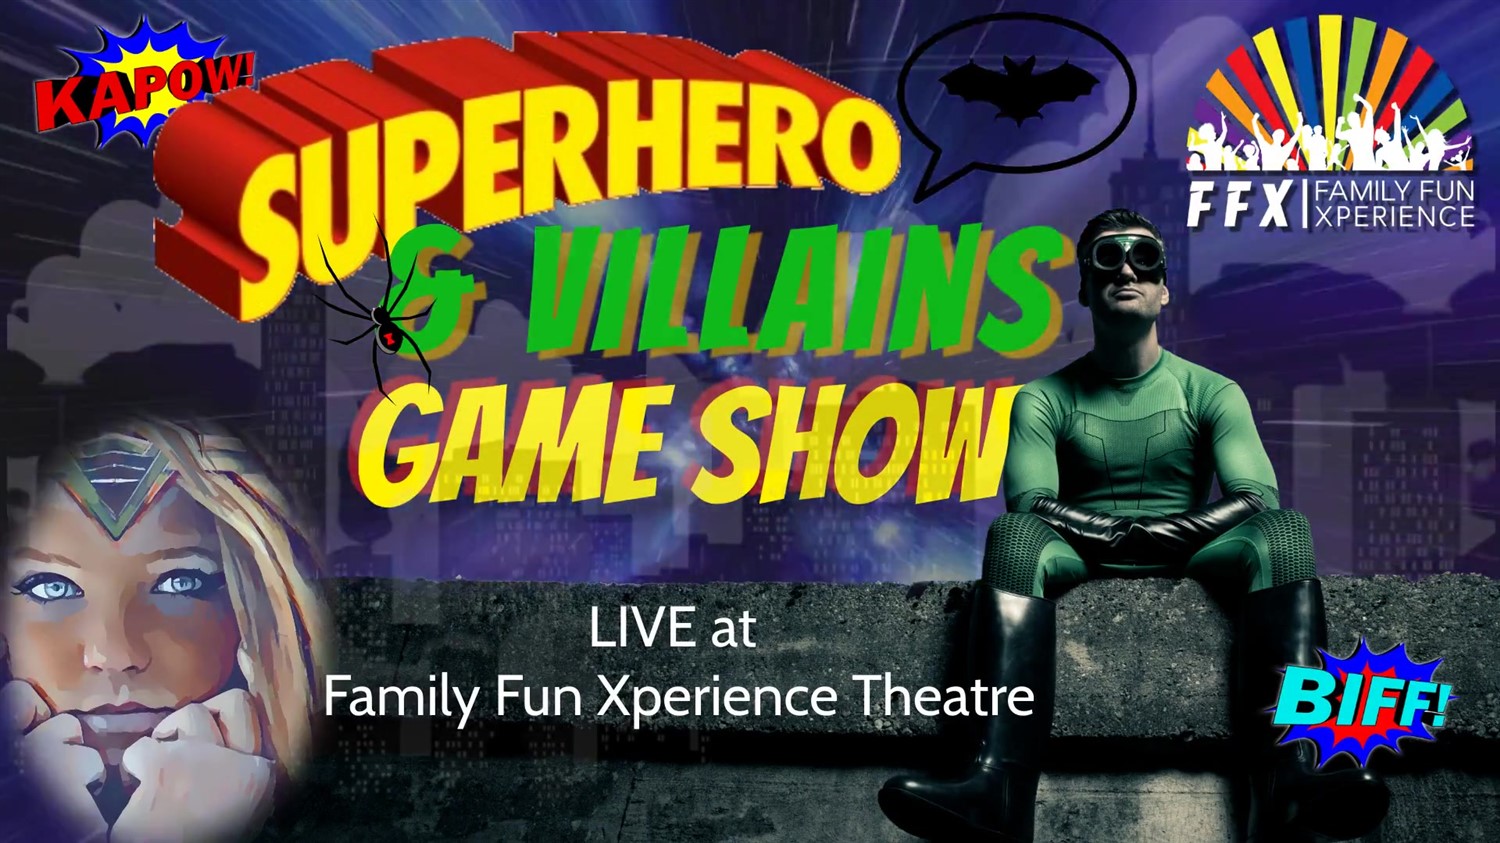 Superheroes & Villains: LIVE GAME SHOW!  on may. 31, 19:00@FFX Theatre - Compra entradas y obtén información enFamily Fun Xperience tickets.ffxshow.org